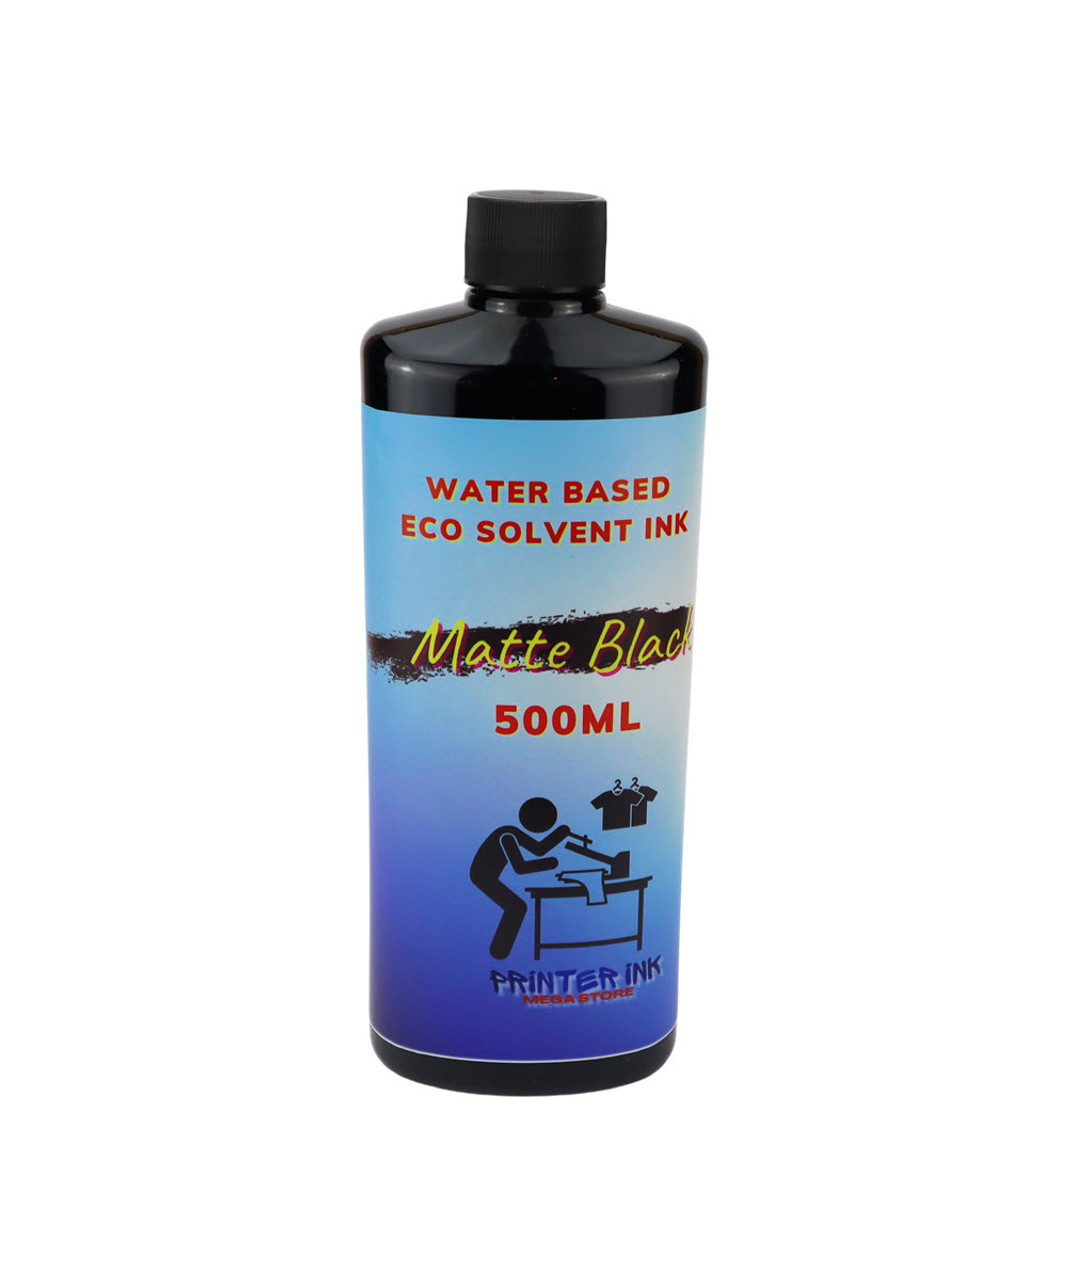 Matte Black Water Based Eco Solvent Ink 500ml bottle for Epson SureColor T3270 T5270 T7270 Printer